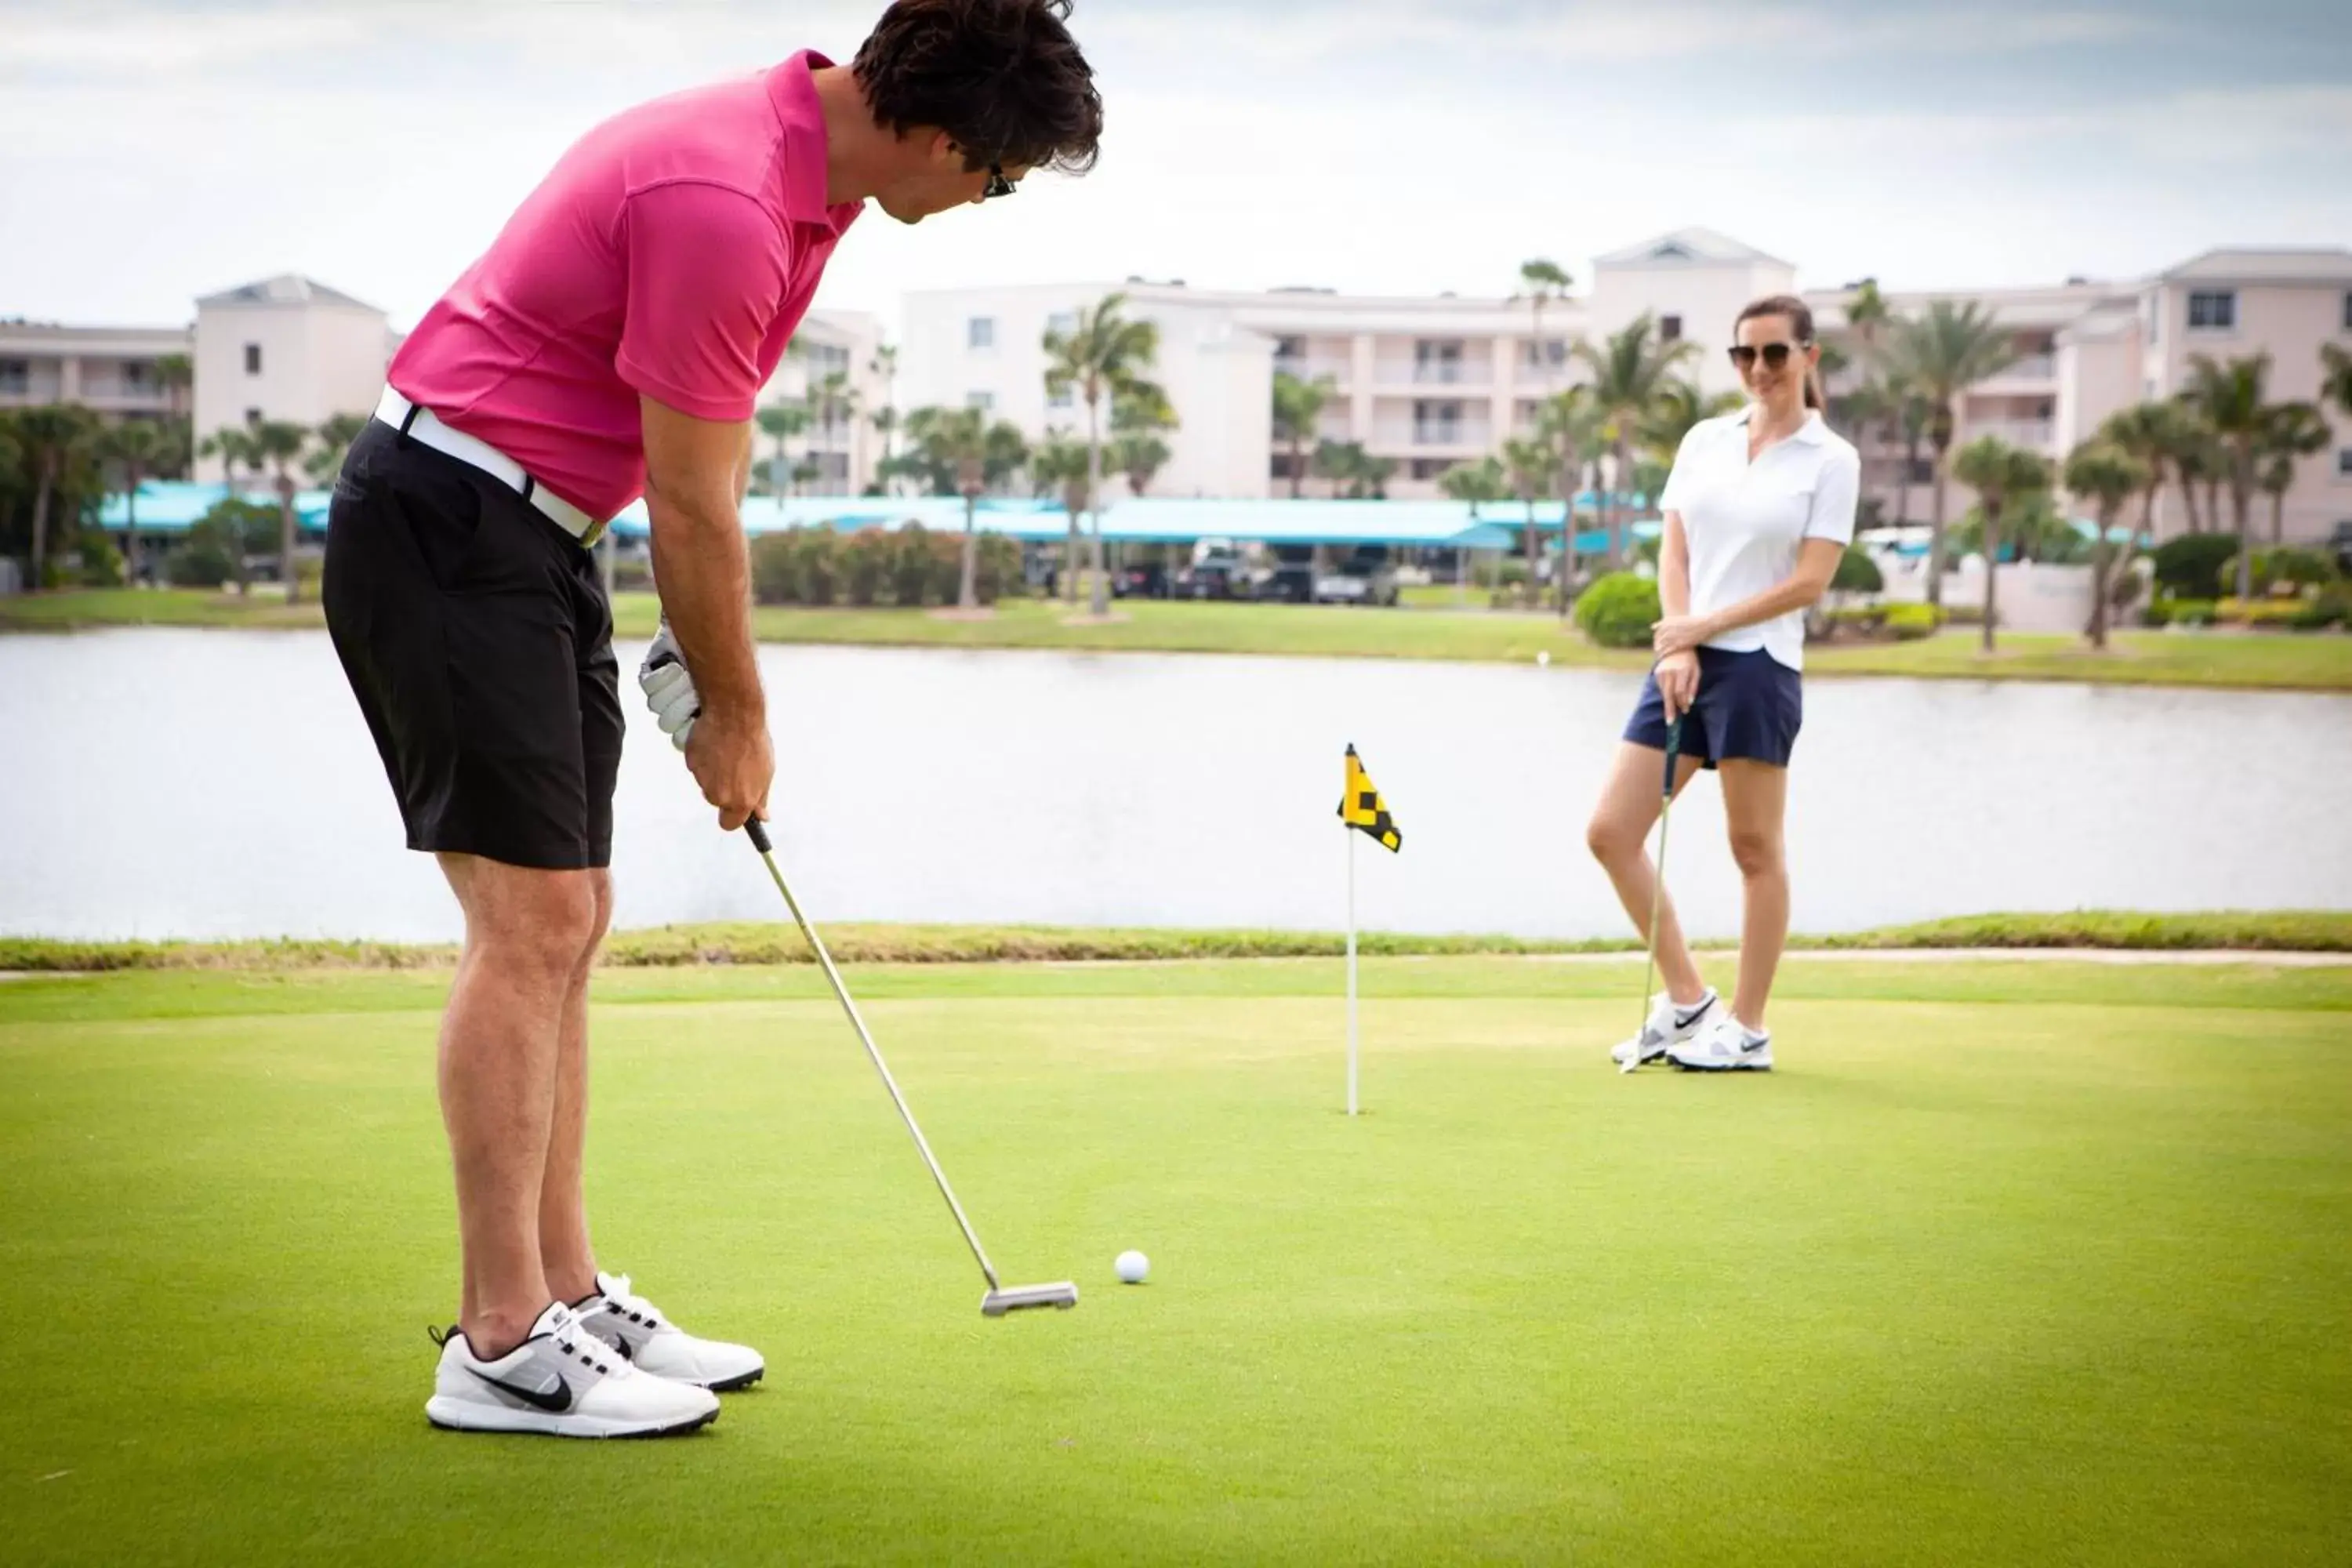 Golfcourse, Golf in Marriott Hutchinson Island Beach Resort, Golf & Marina